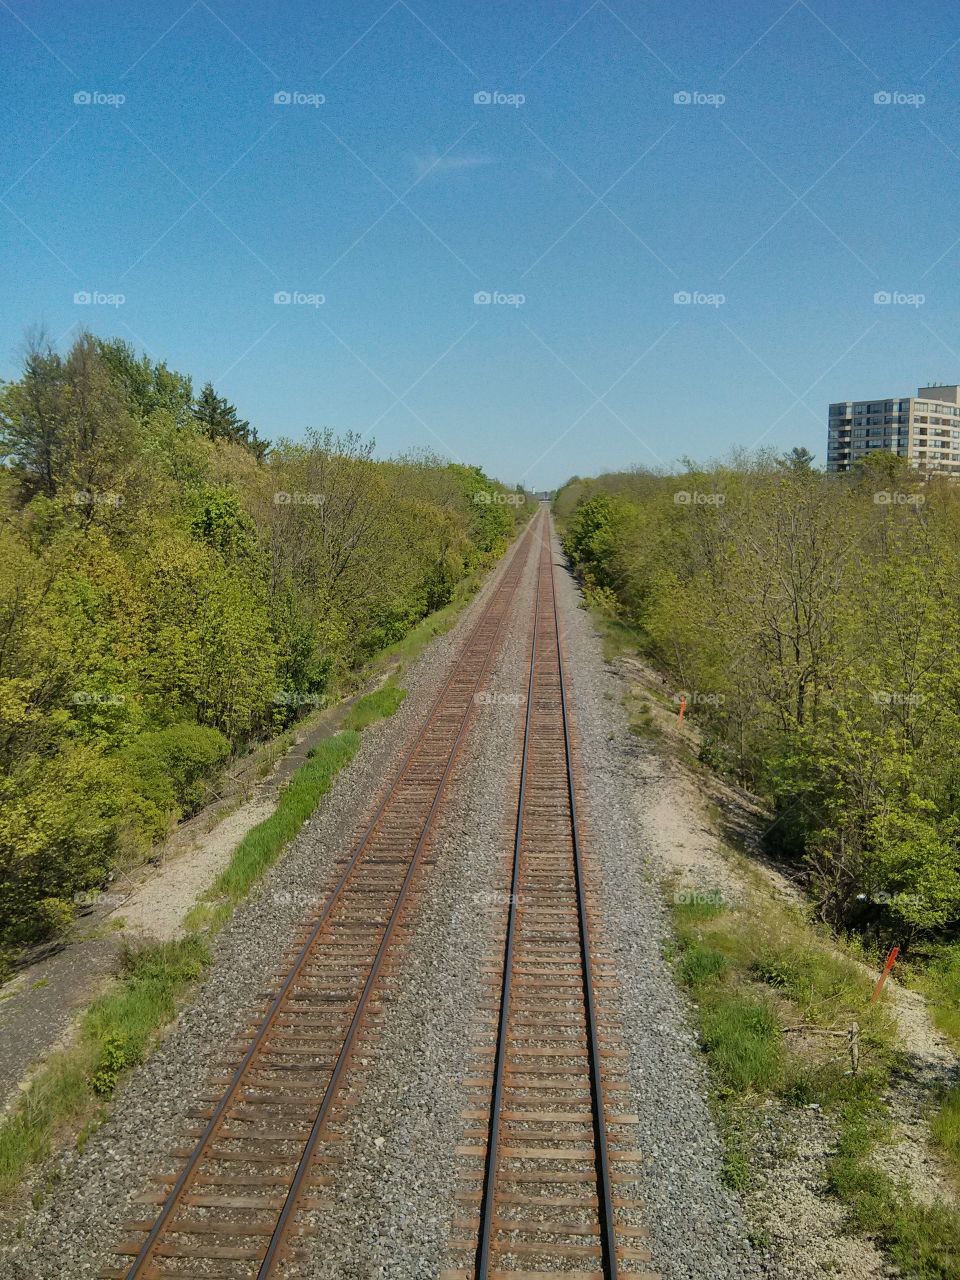 Diminishing view of railroad track